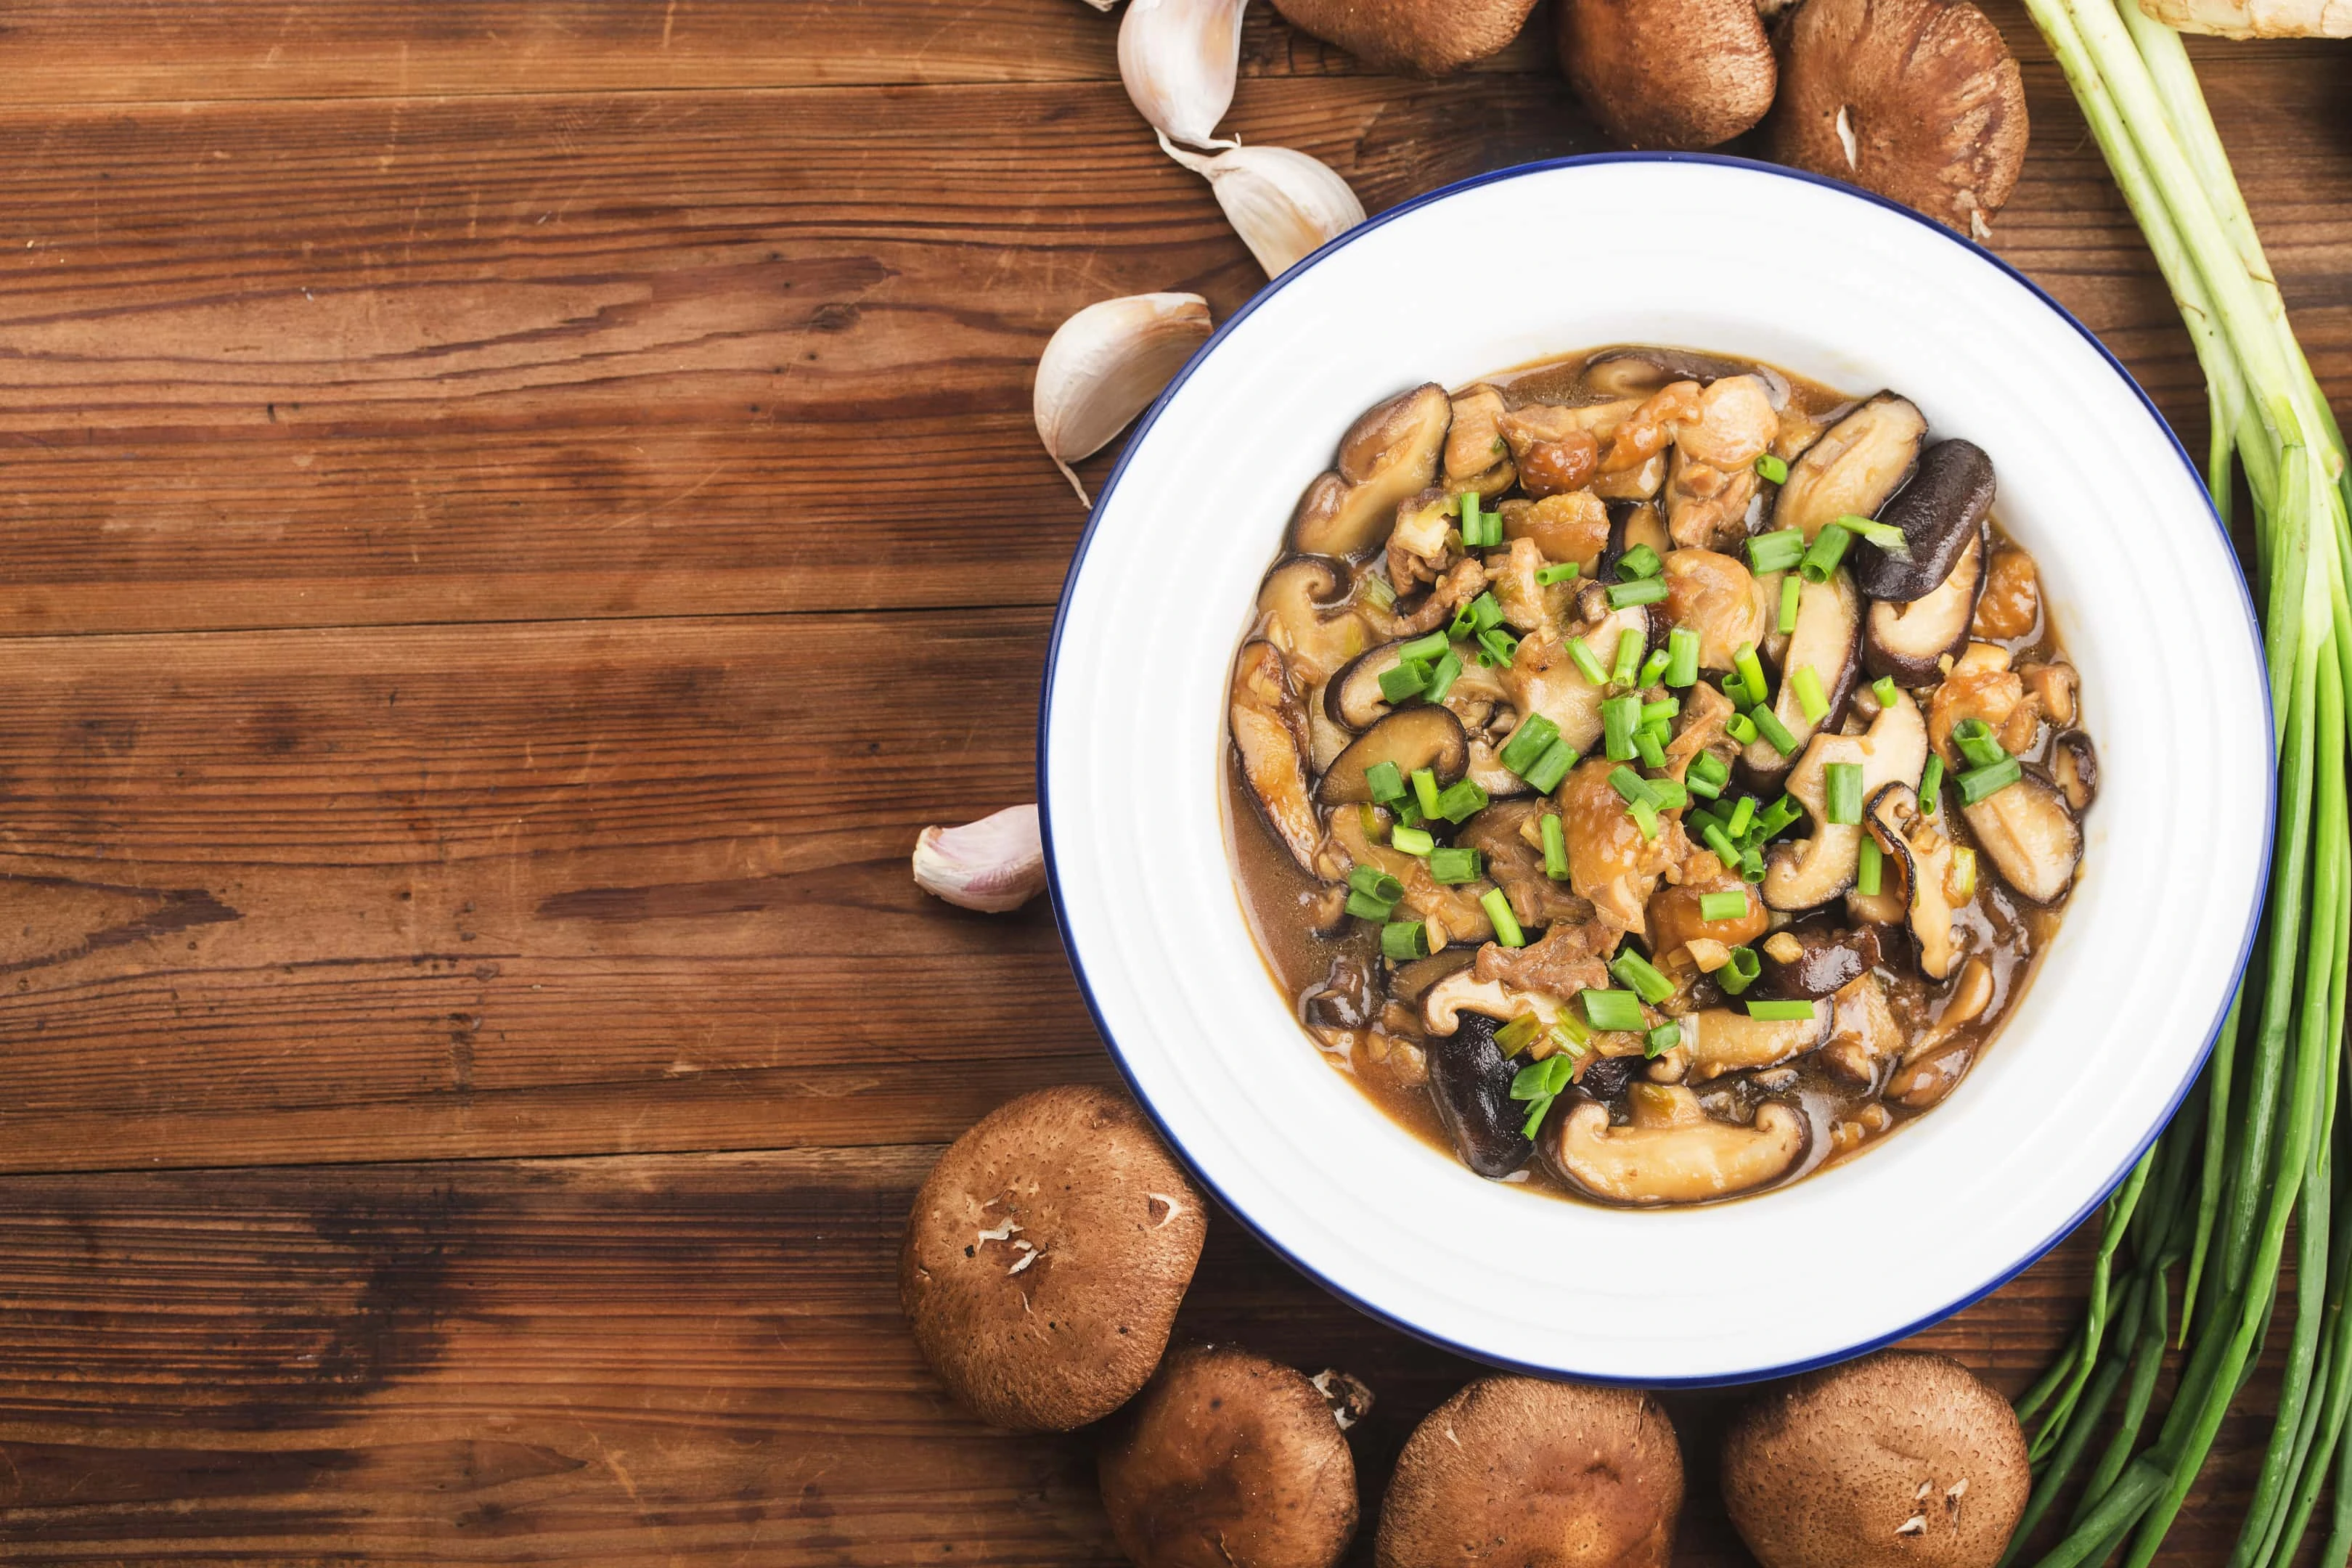 Chinese food — shiitake mushroom stir fried with chicken